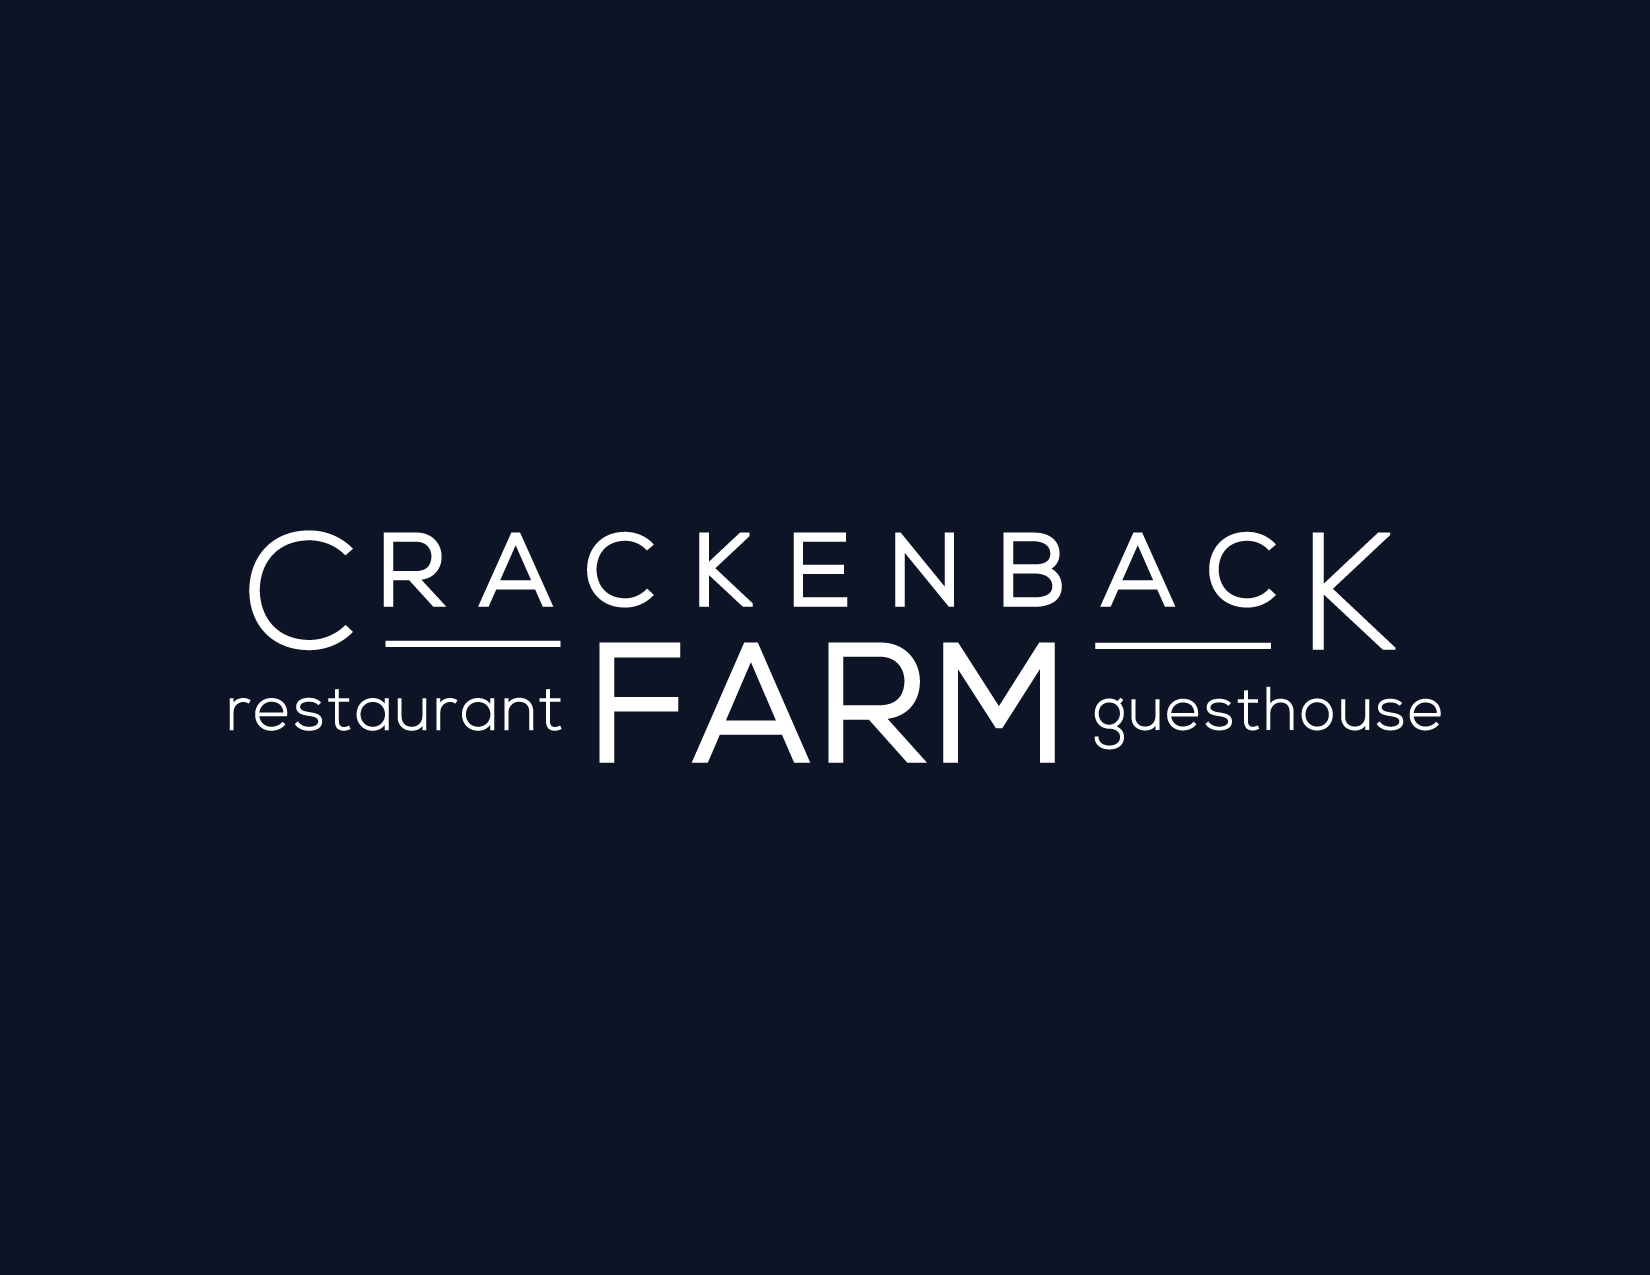 Crackenback Farm